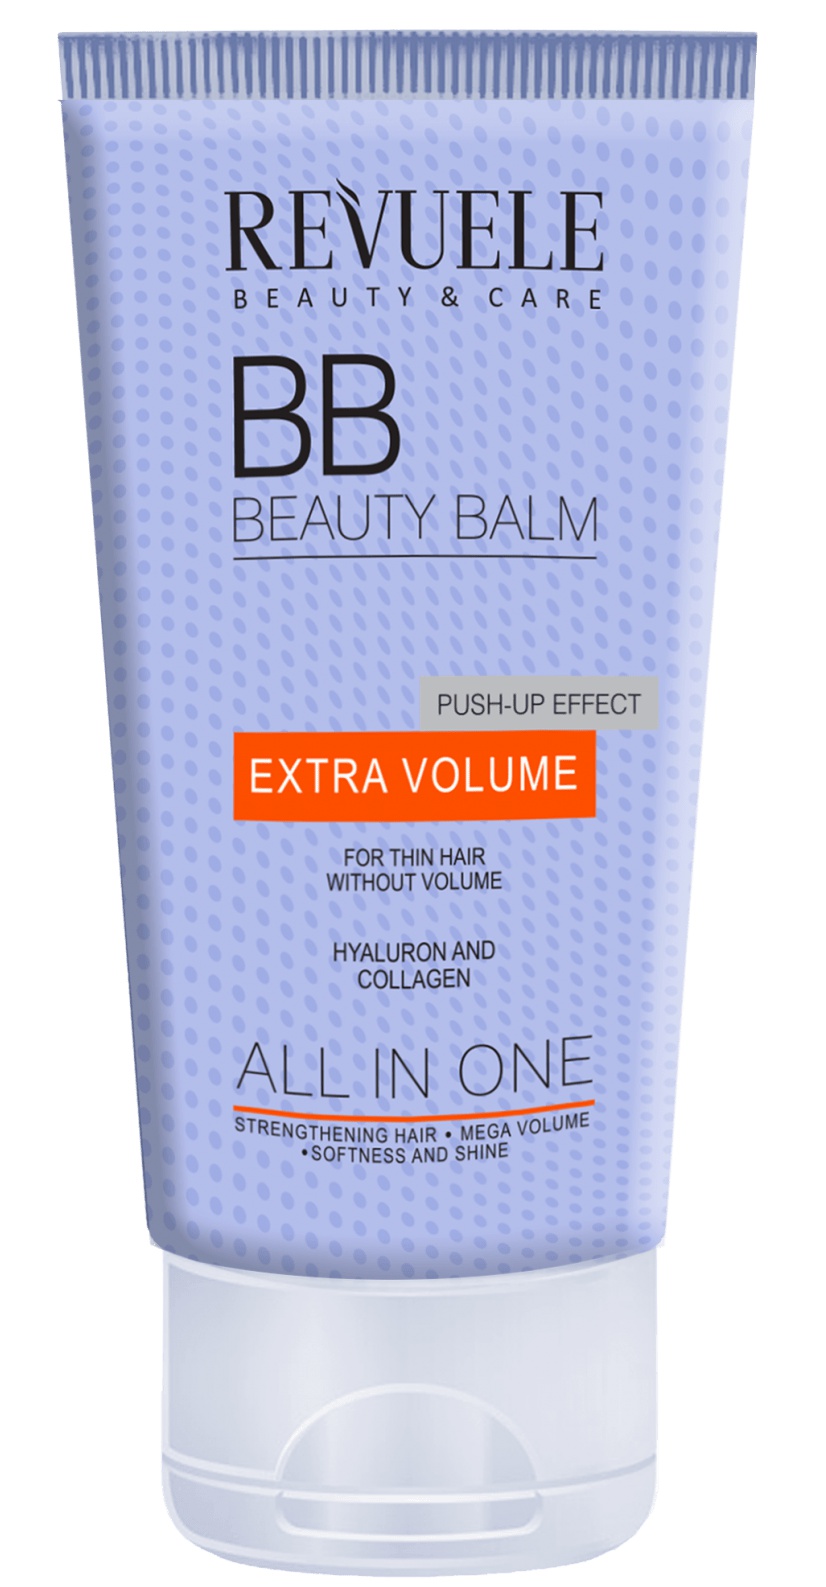 Revuele BB Beauty Balm Extra Volume